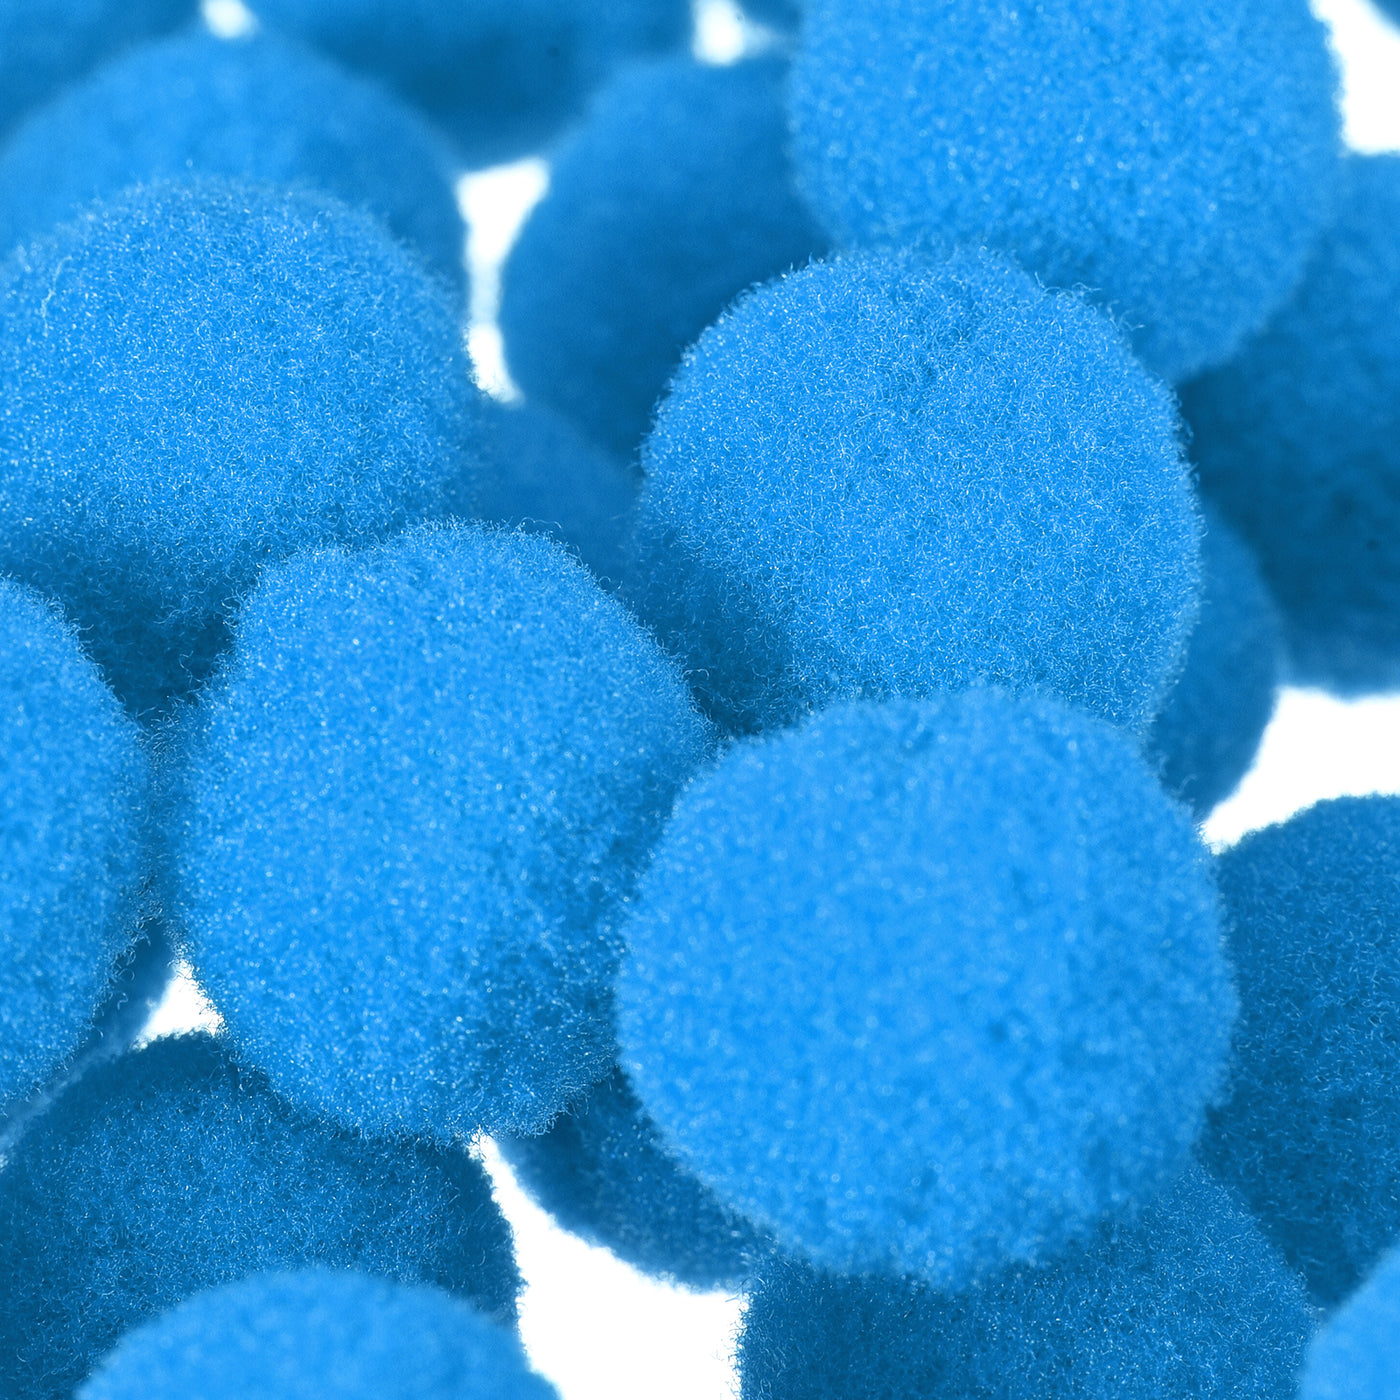 Harfington Pom Felt Balls Fabric 1.5cm 15mm Blue for Craft Project DIY 300 Pcs